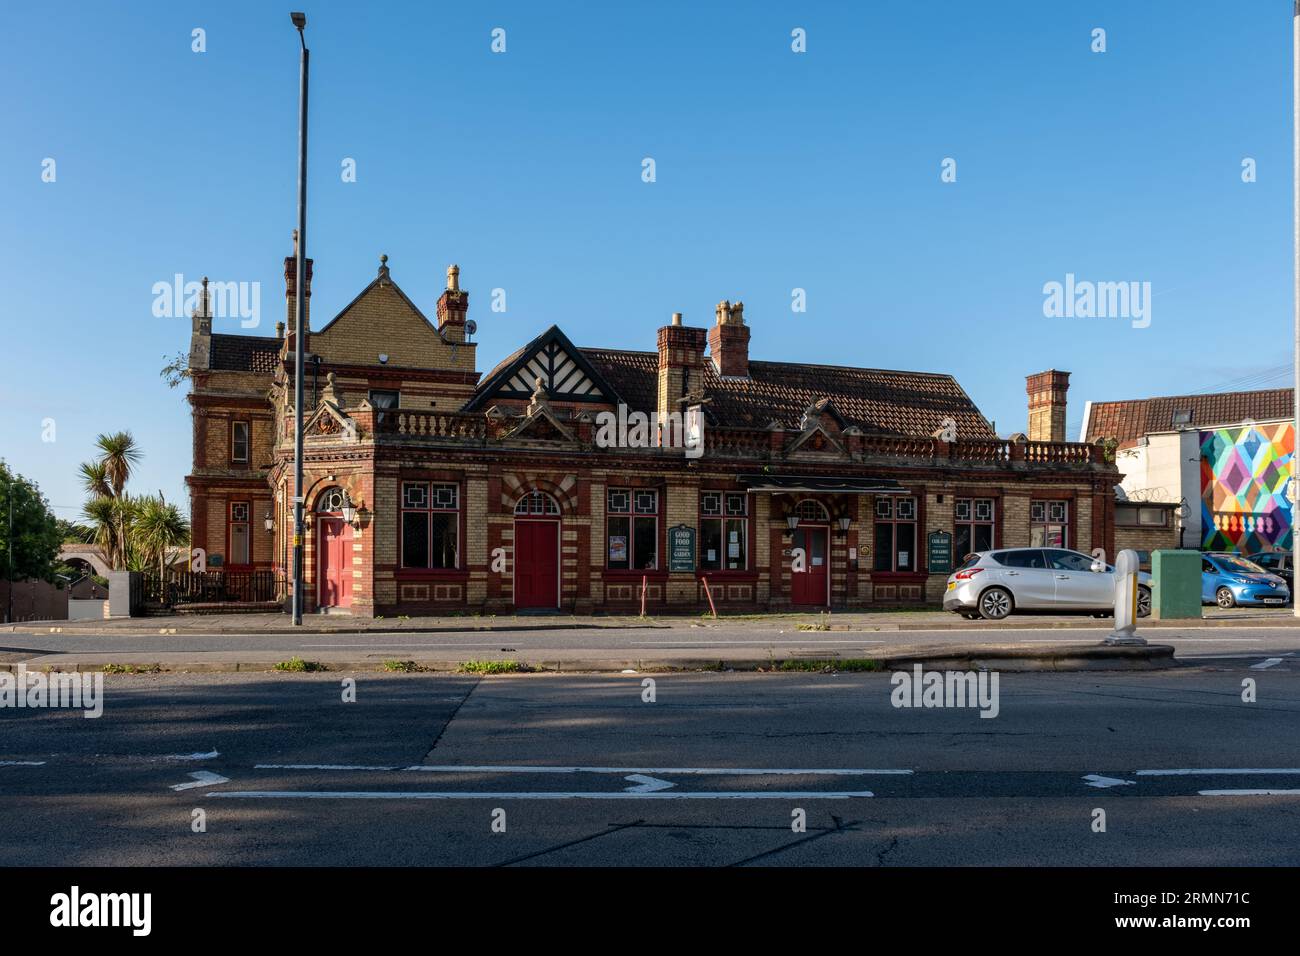 The Queen's Head pub. Eastville, Bristol, UK Stock Photo